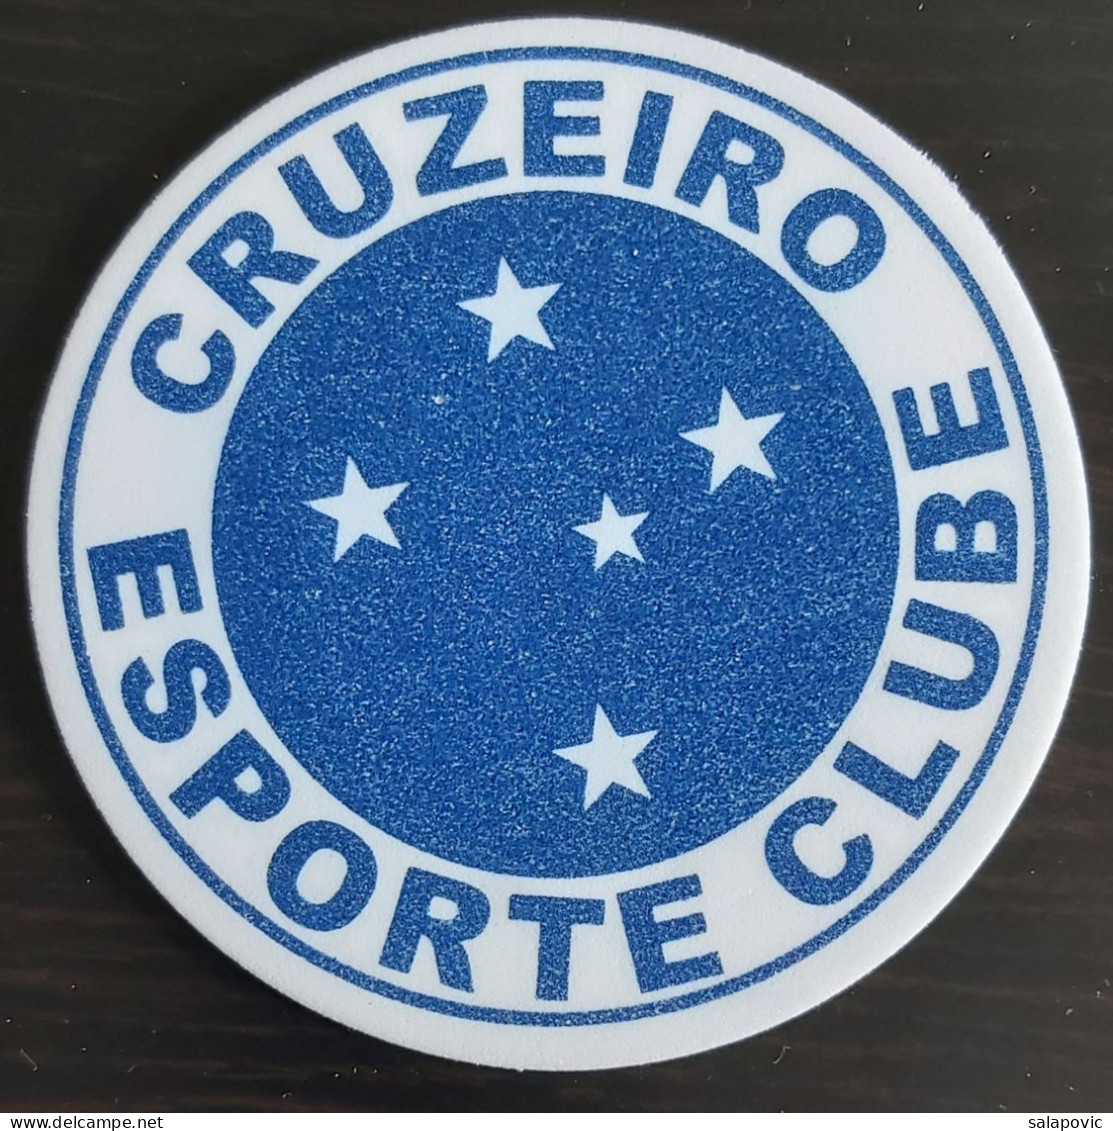 Cruzeiro Esporte Clube Brasil Soccer Football  club Soccer Fussball Calcio Futbol Futebol 7 Pieces Coaster - Habillement, Souvenirs & Autres